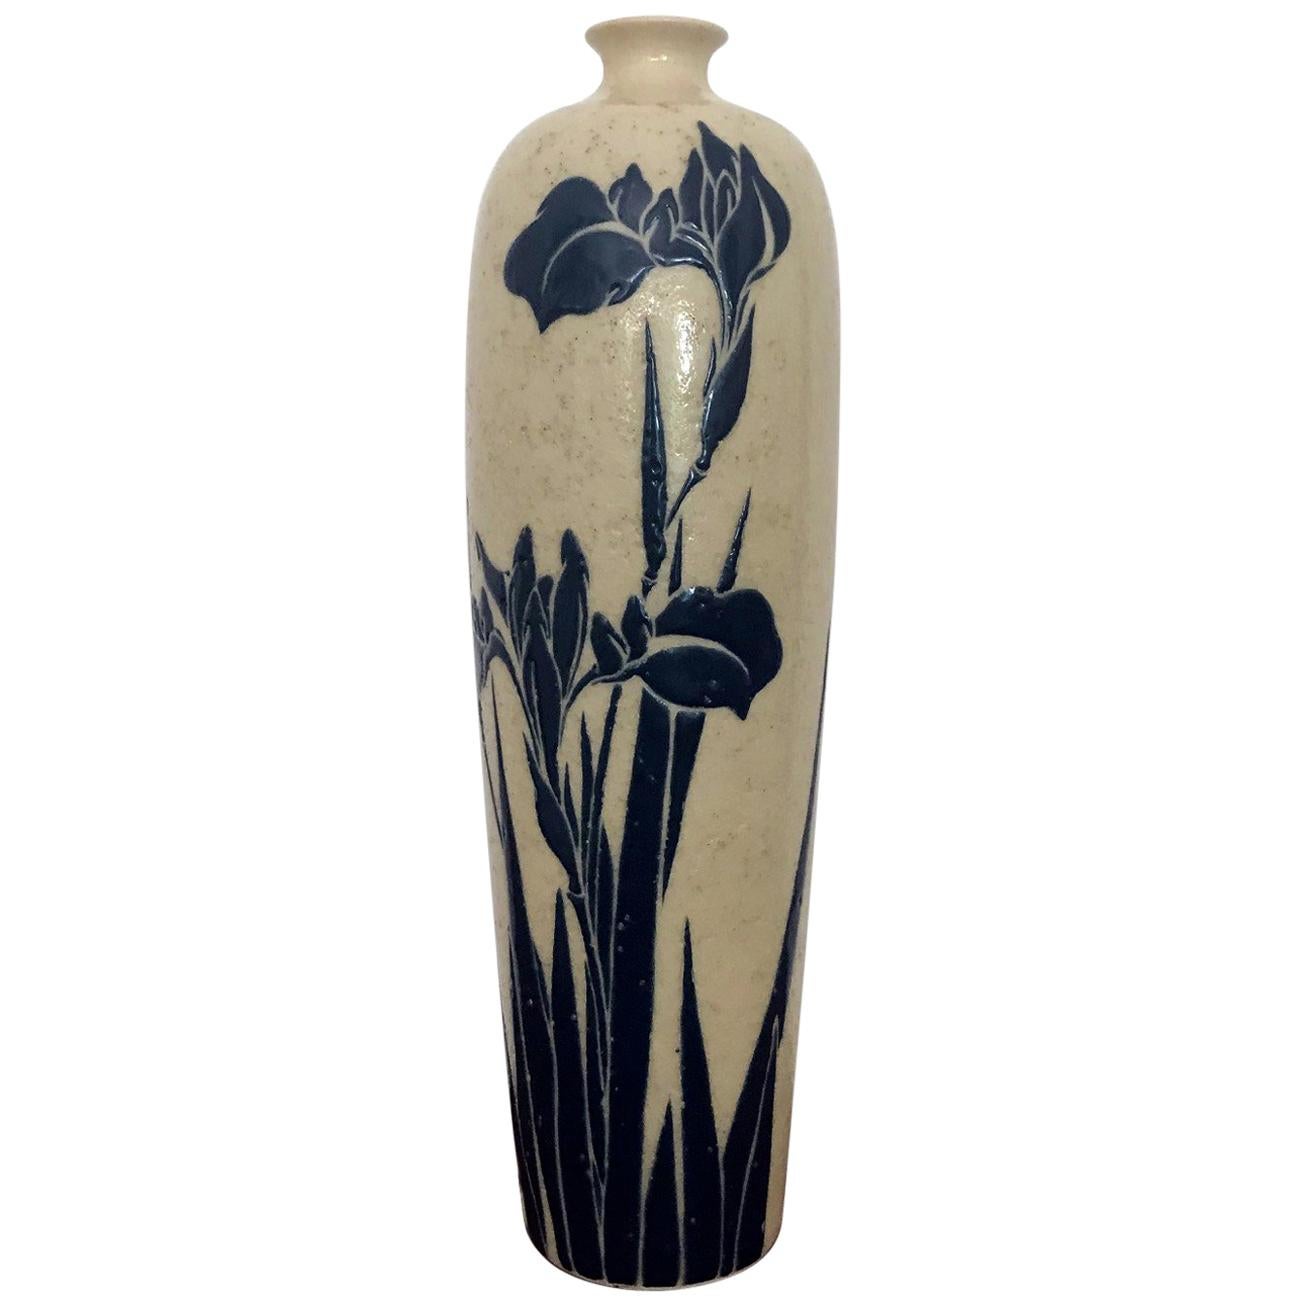 Japanese Kyoto Ware Vase Attributed to Ninsei